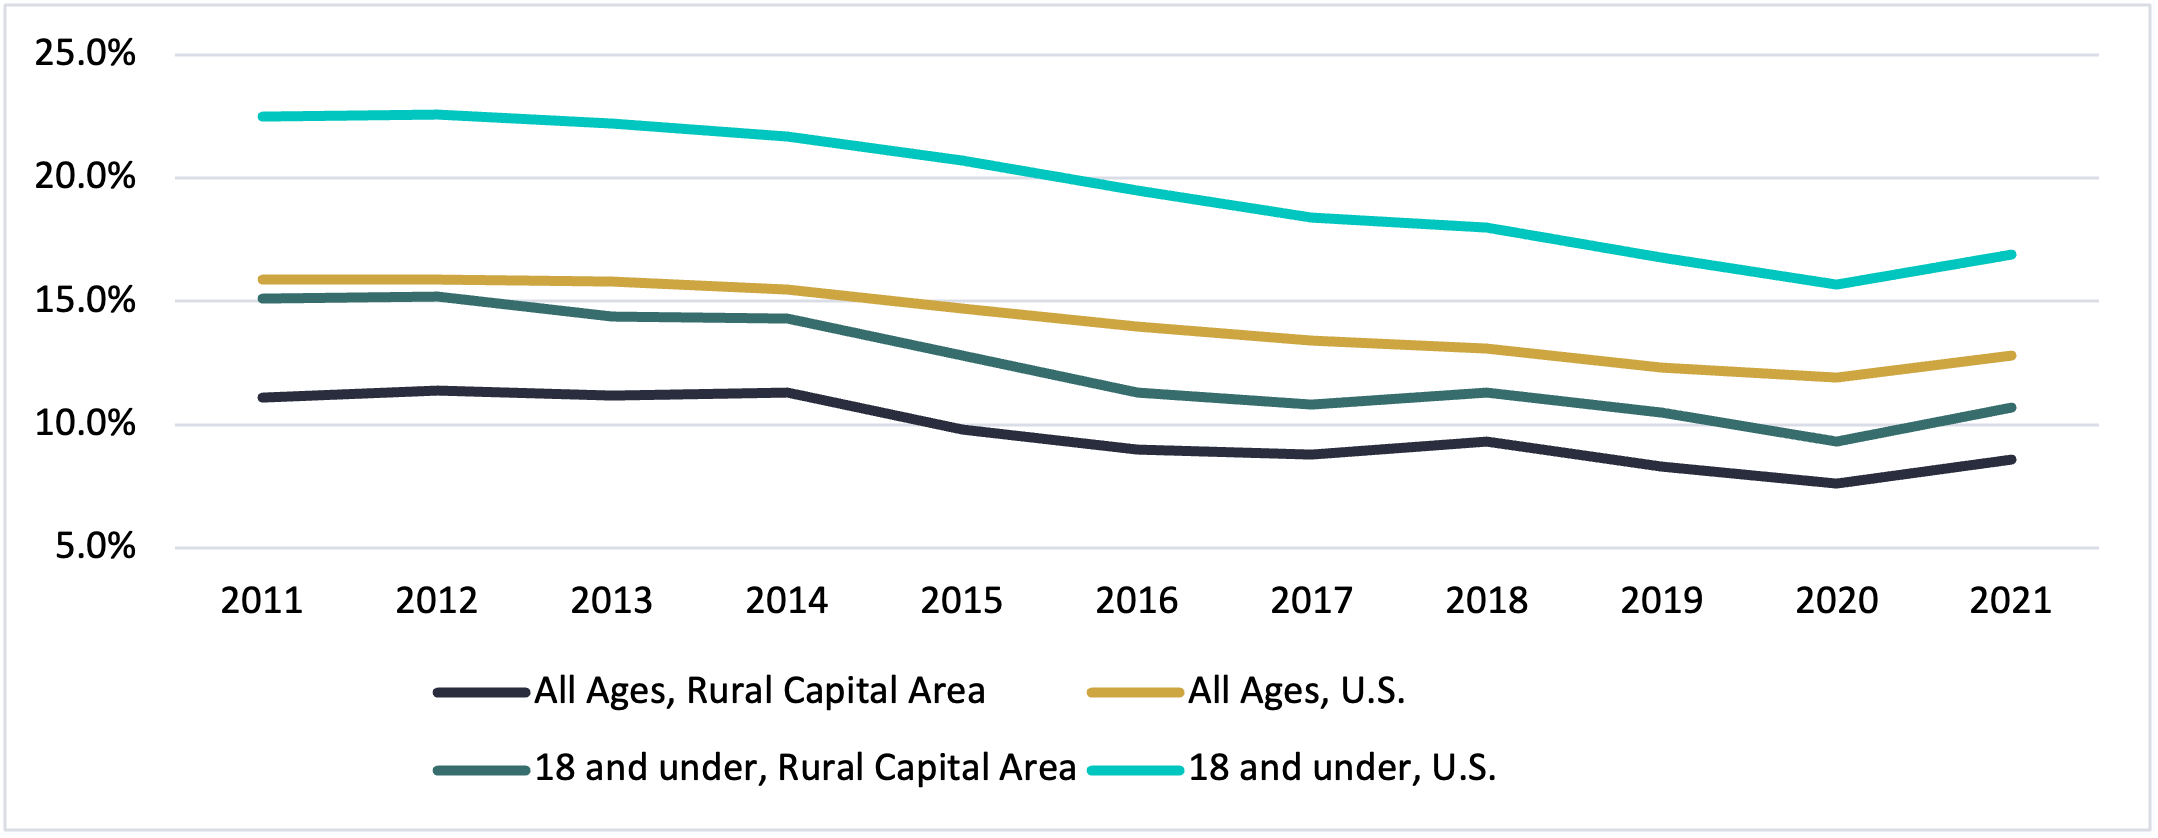 Percent in Poverty Rural Capital Area vs US 2021